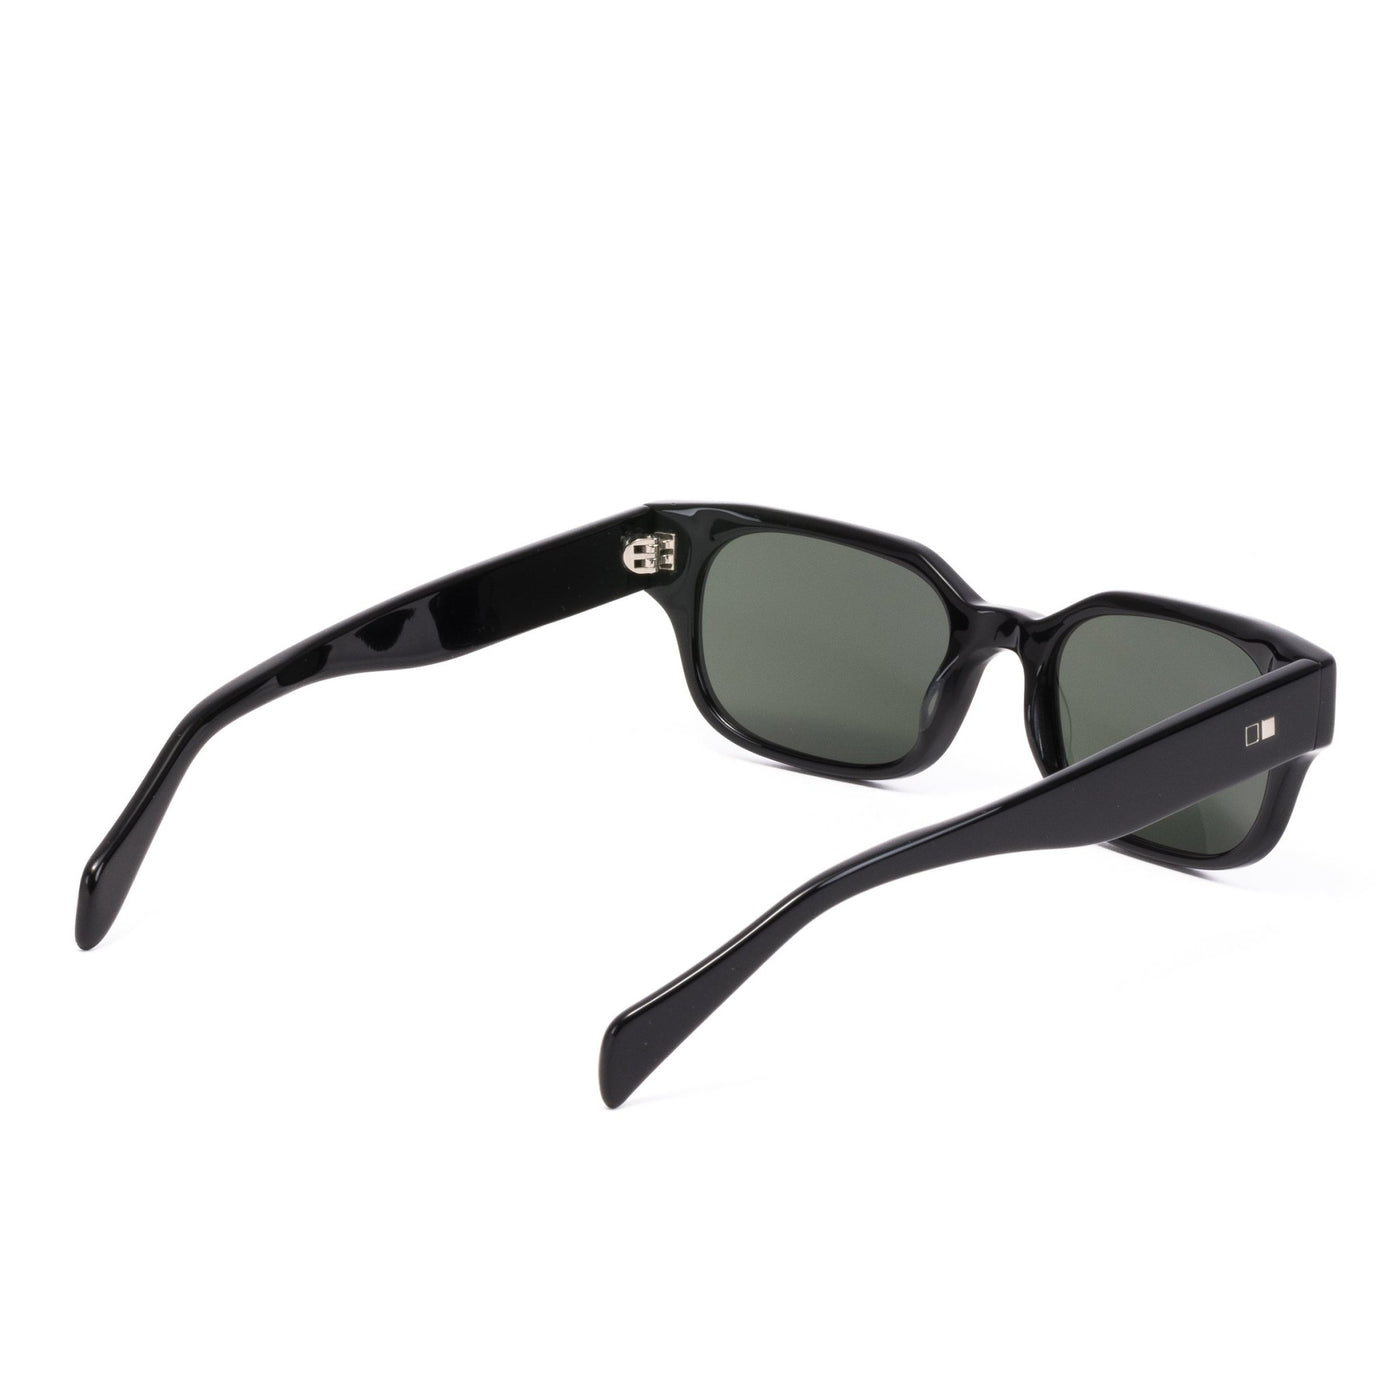 Black sunglasses facing the back 